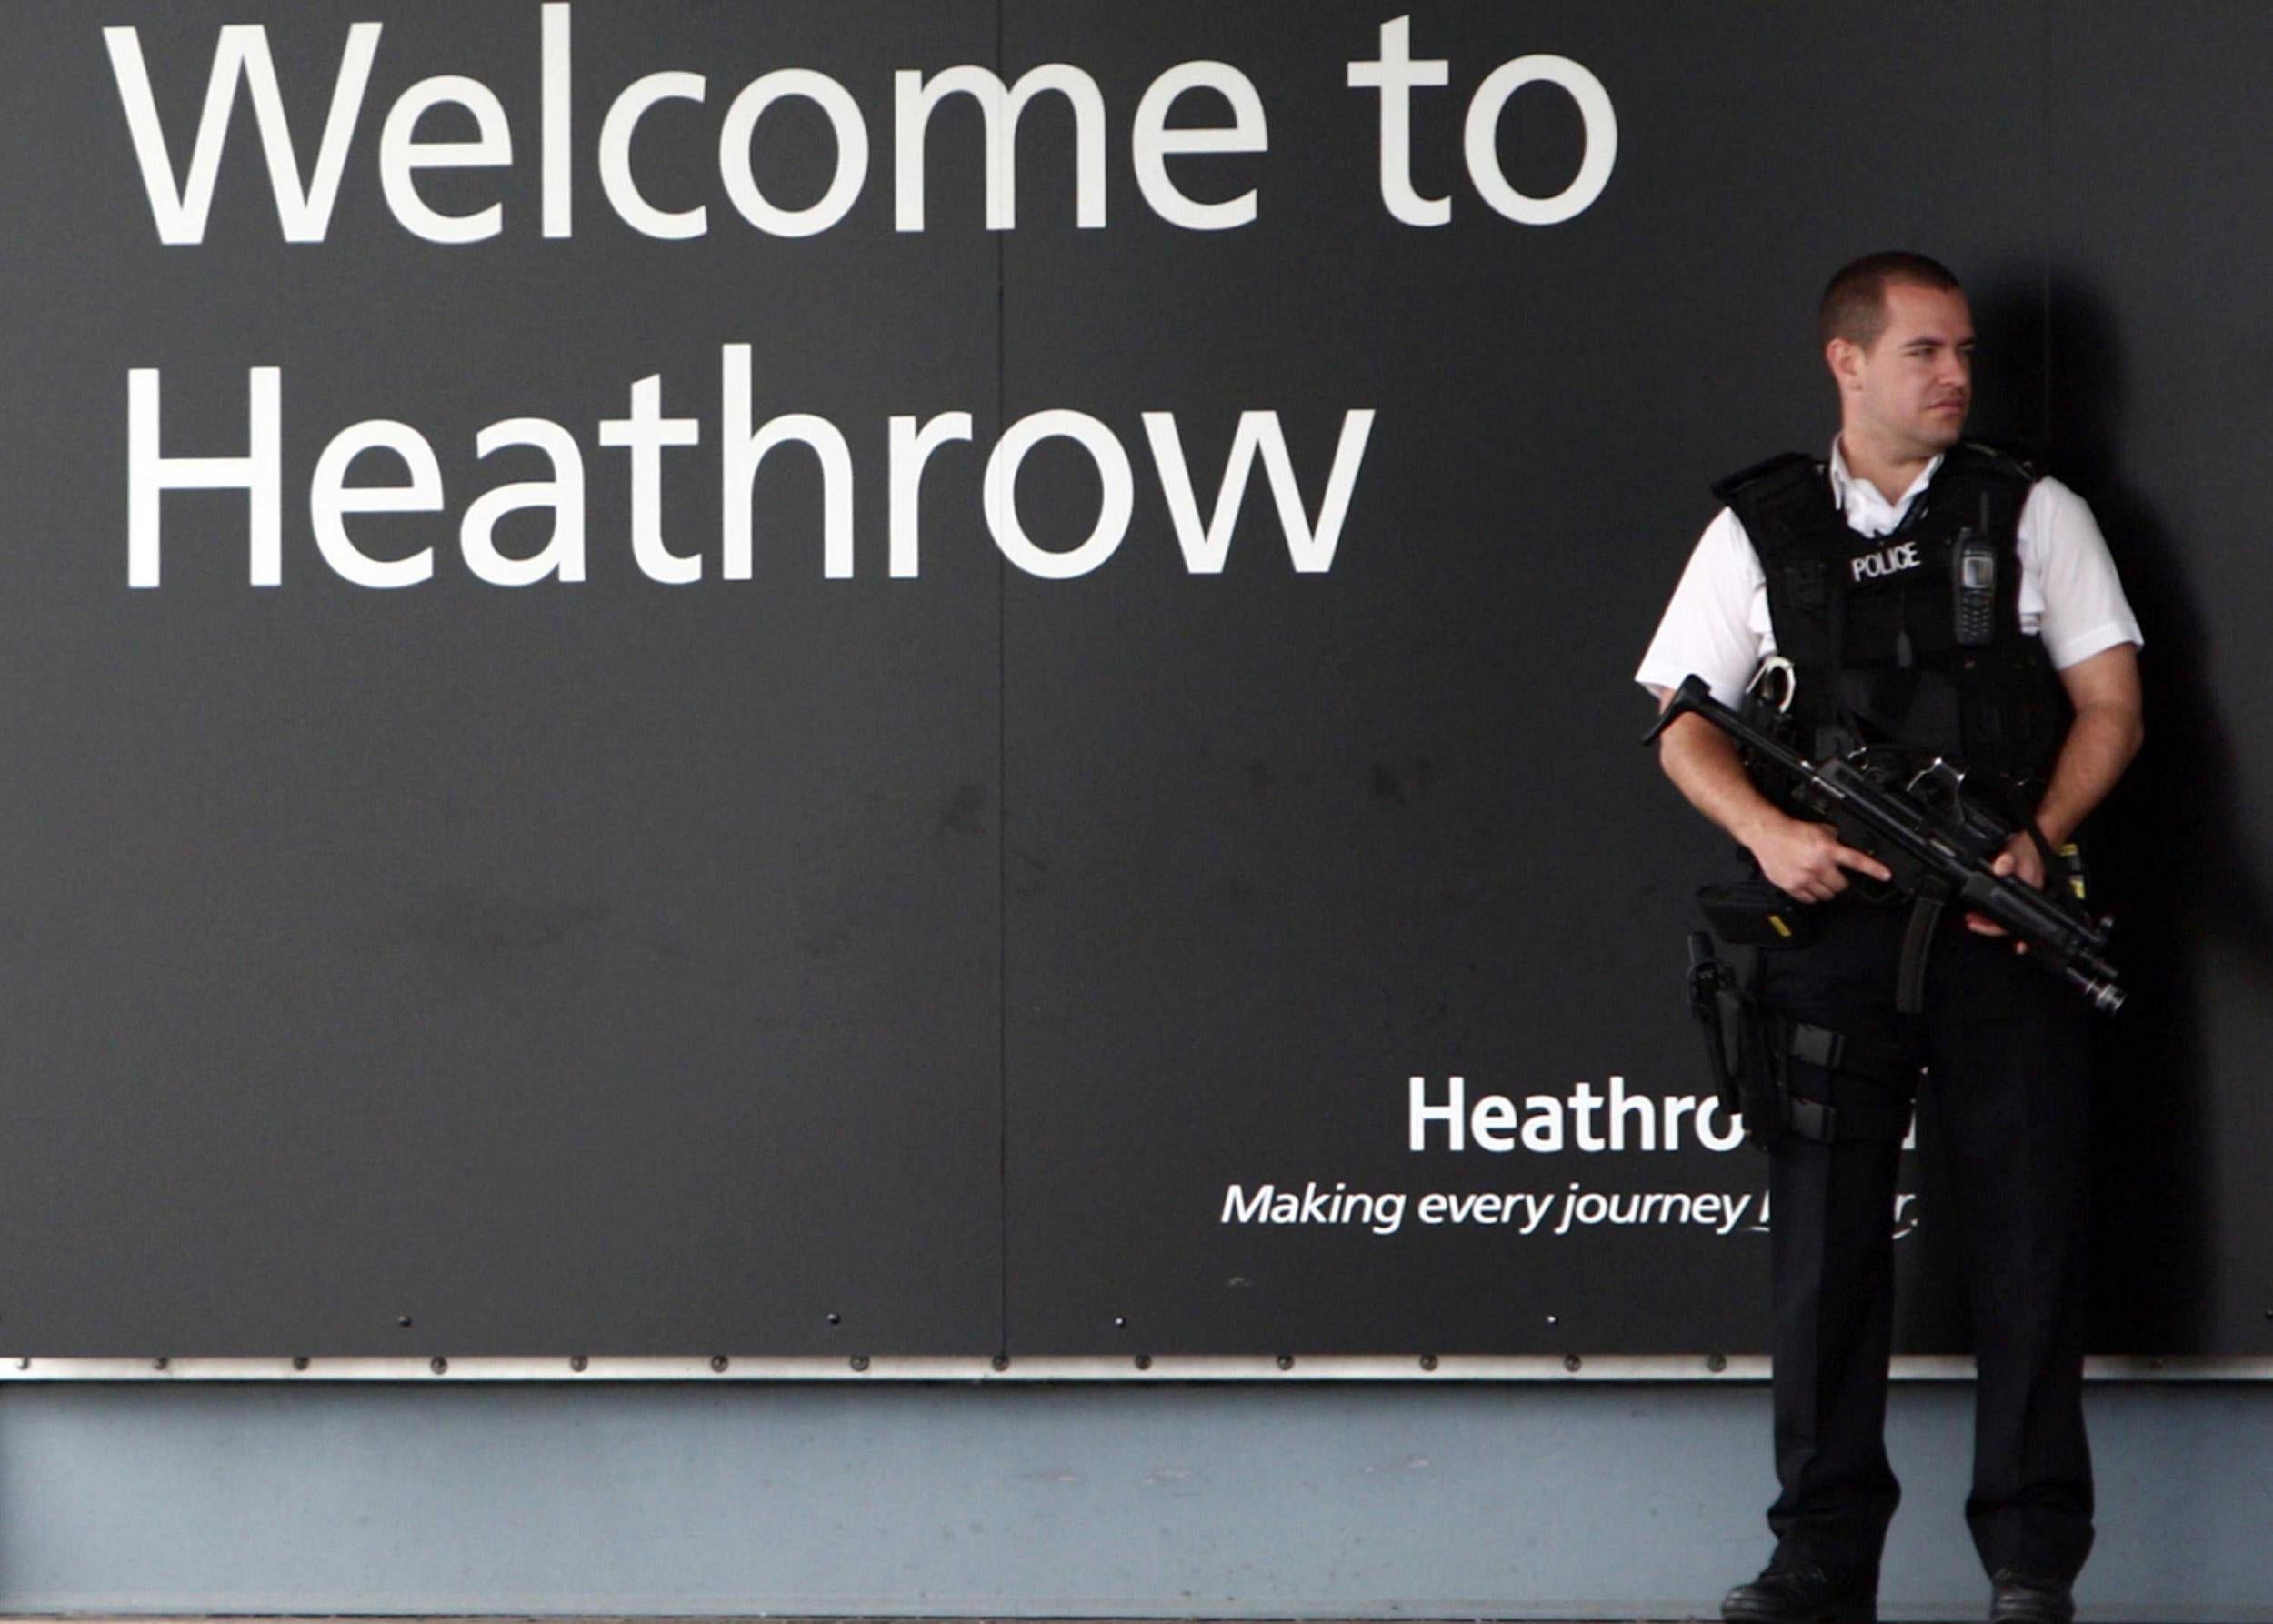 Welcome to Heathrow